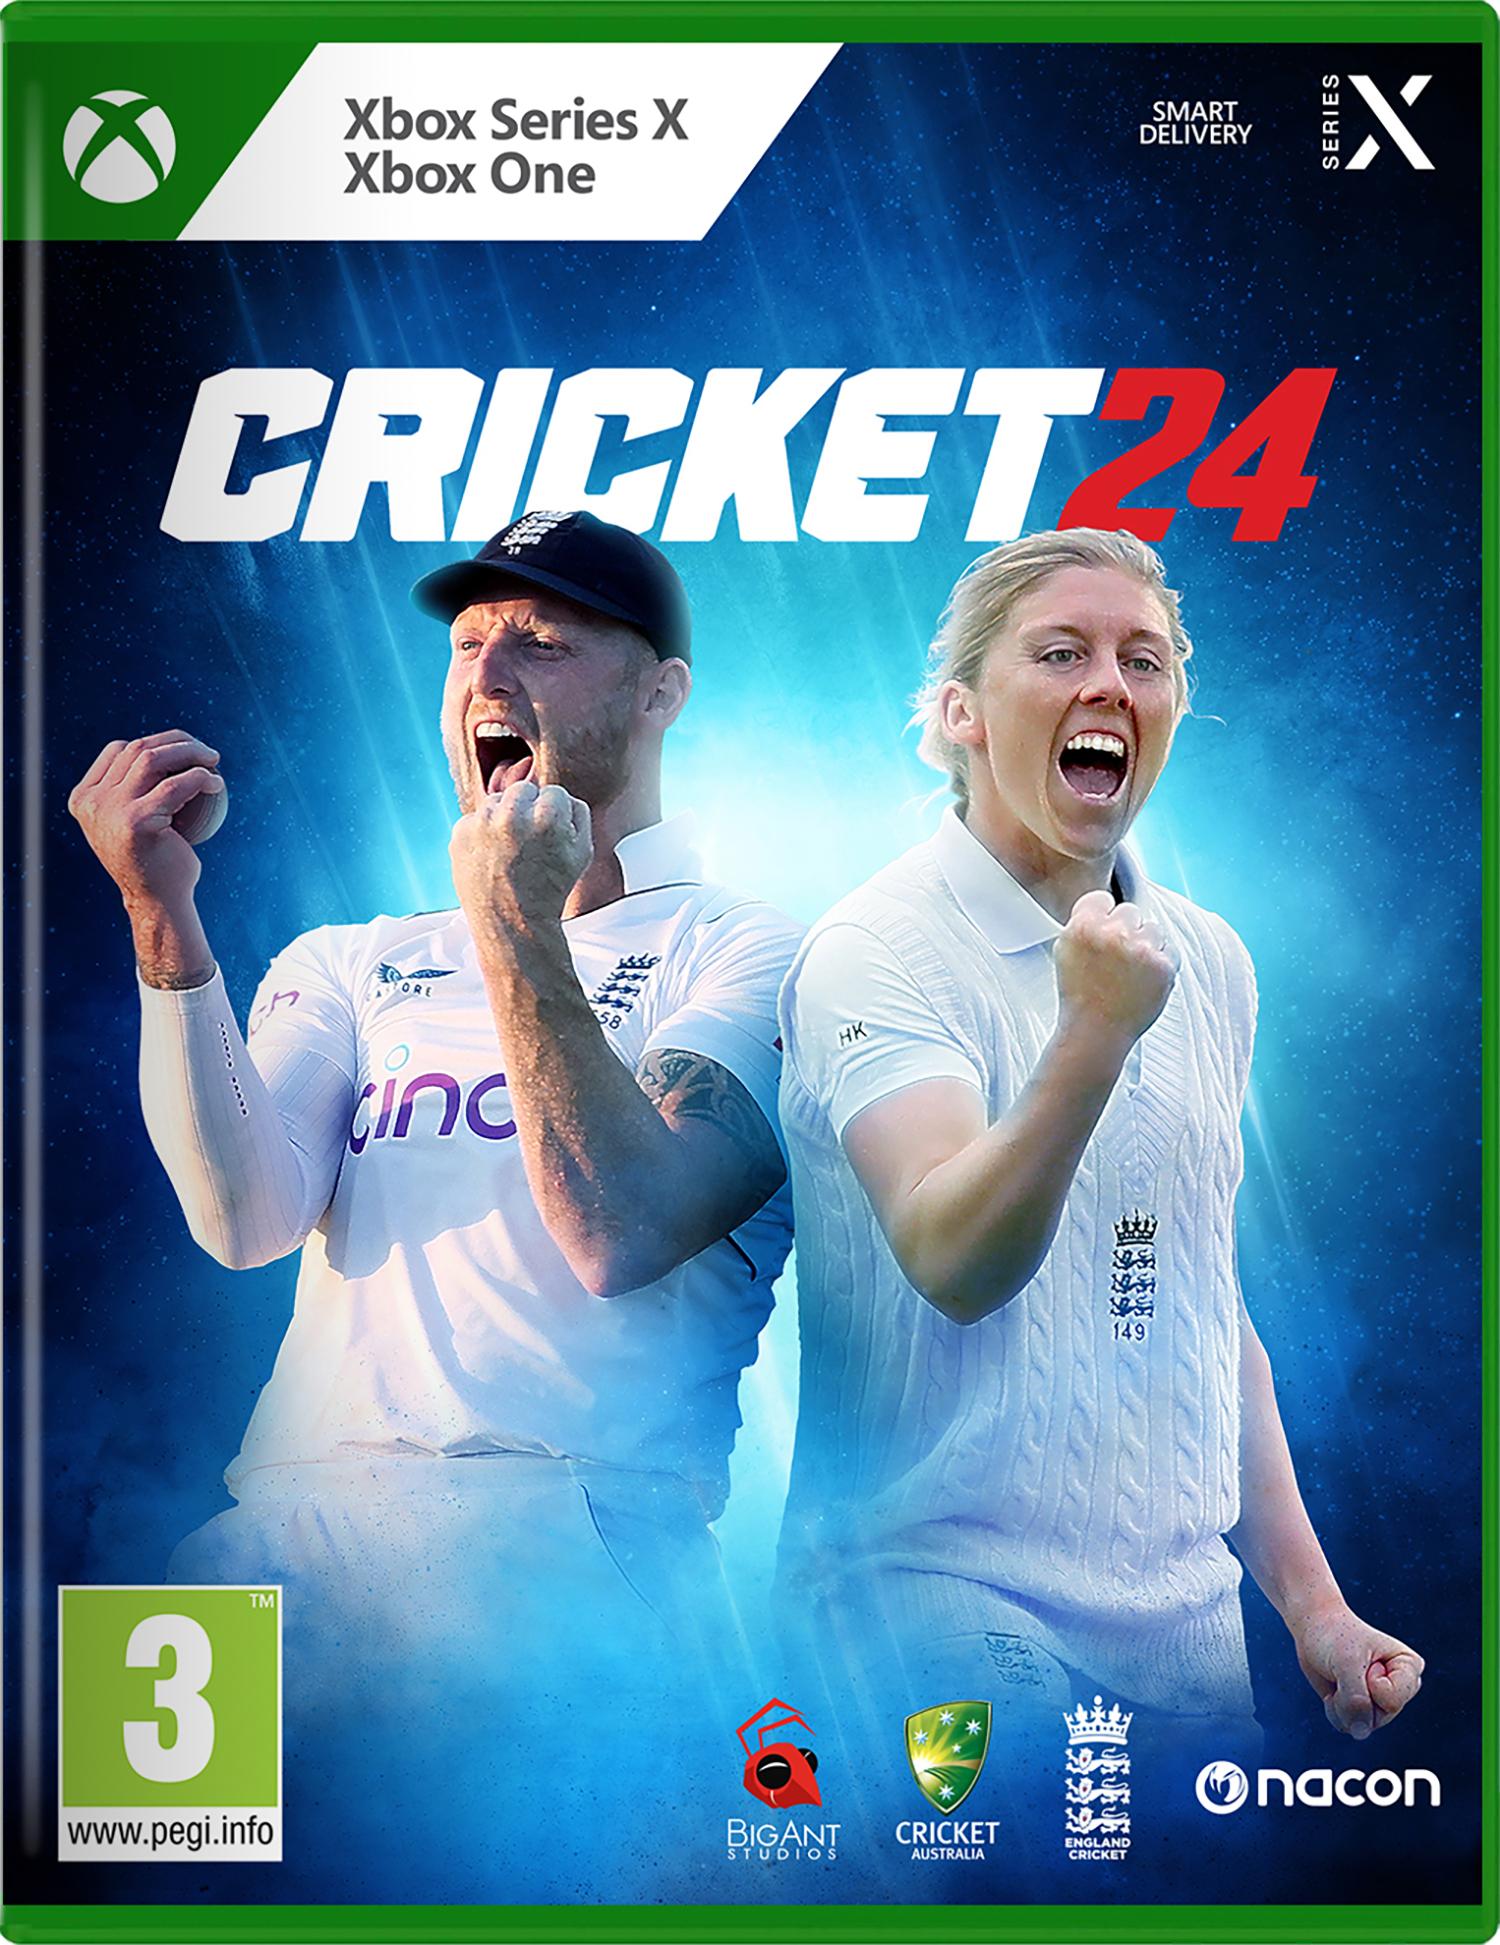 XBOX Cricket 24